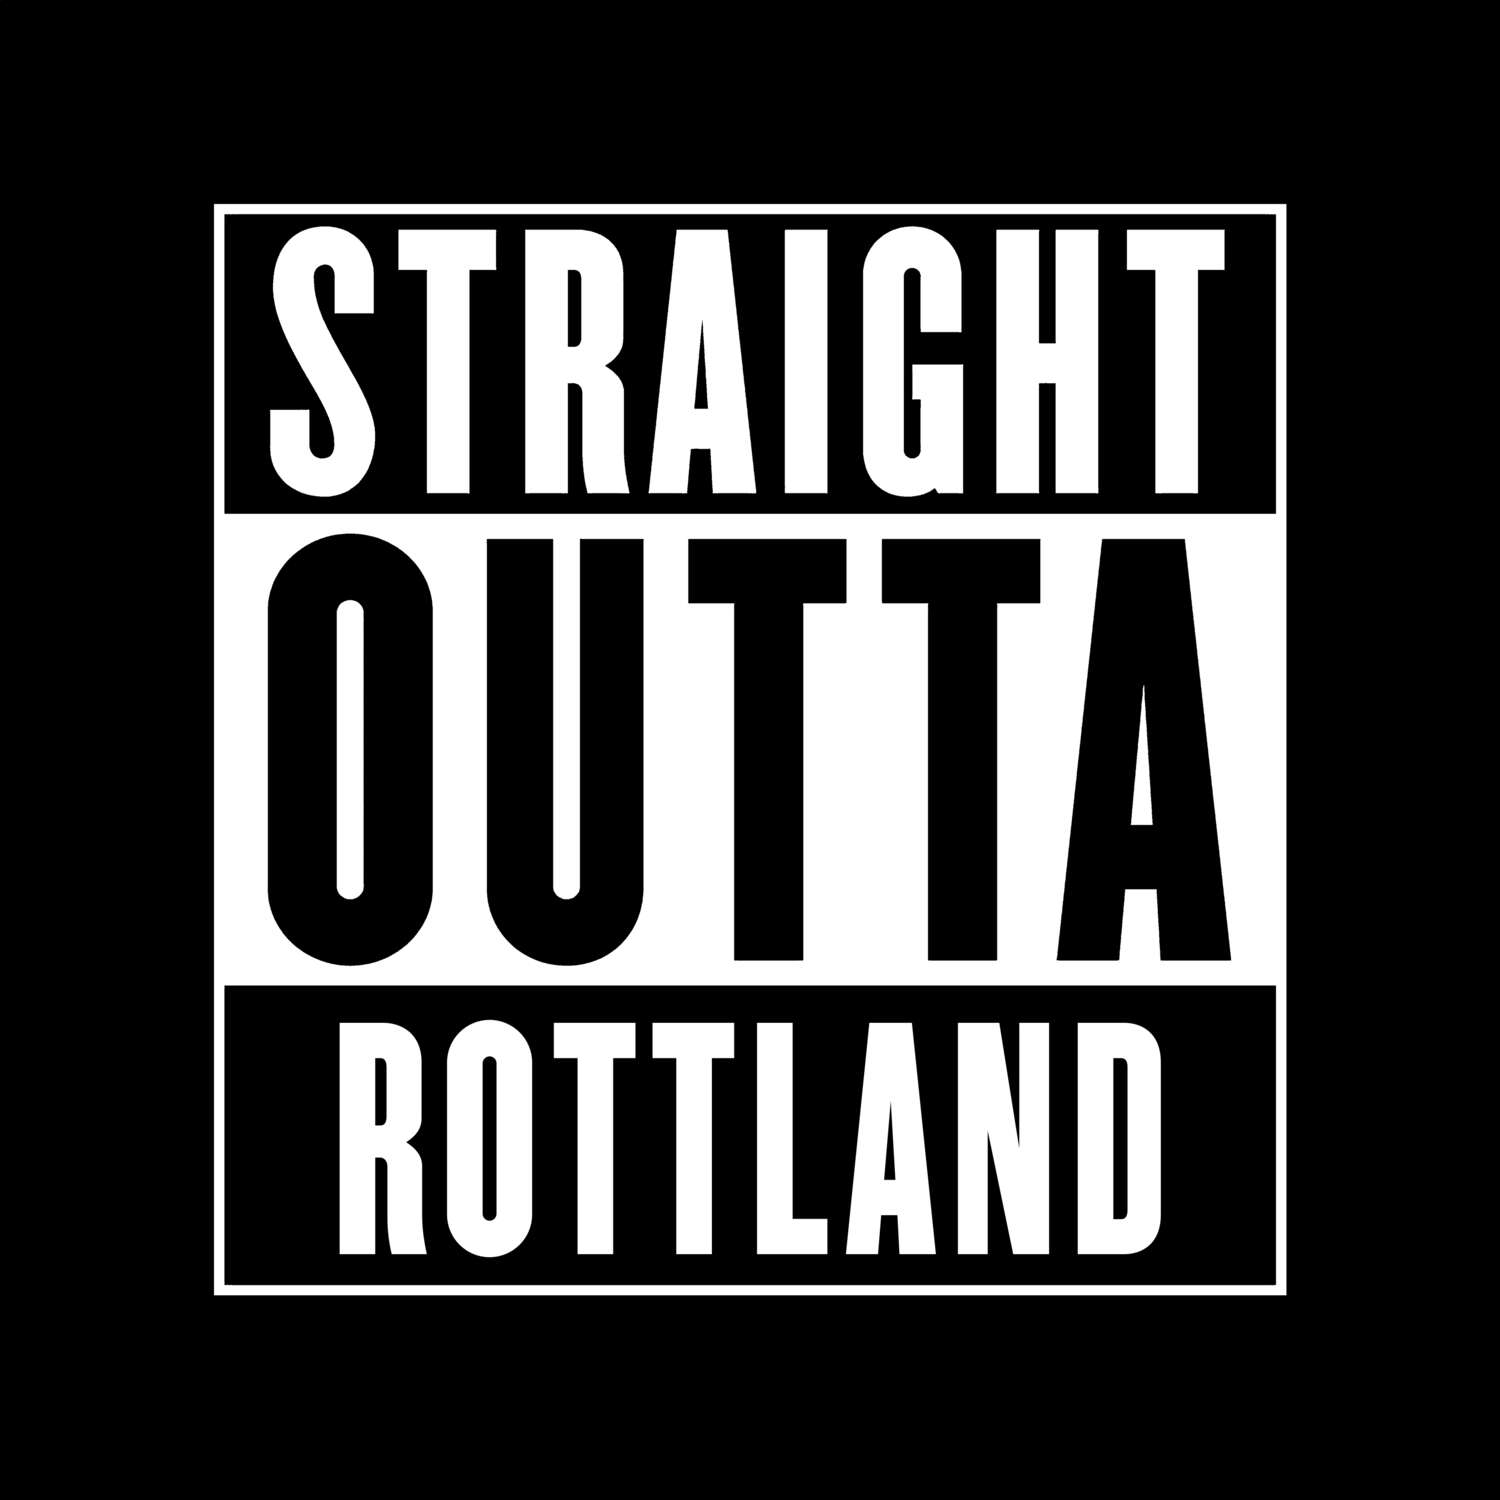 Rottland T-Shirt »Straight Outta«